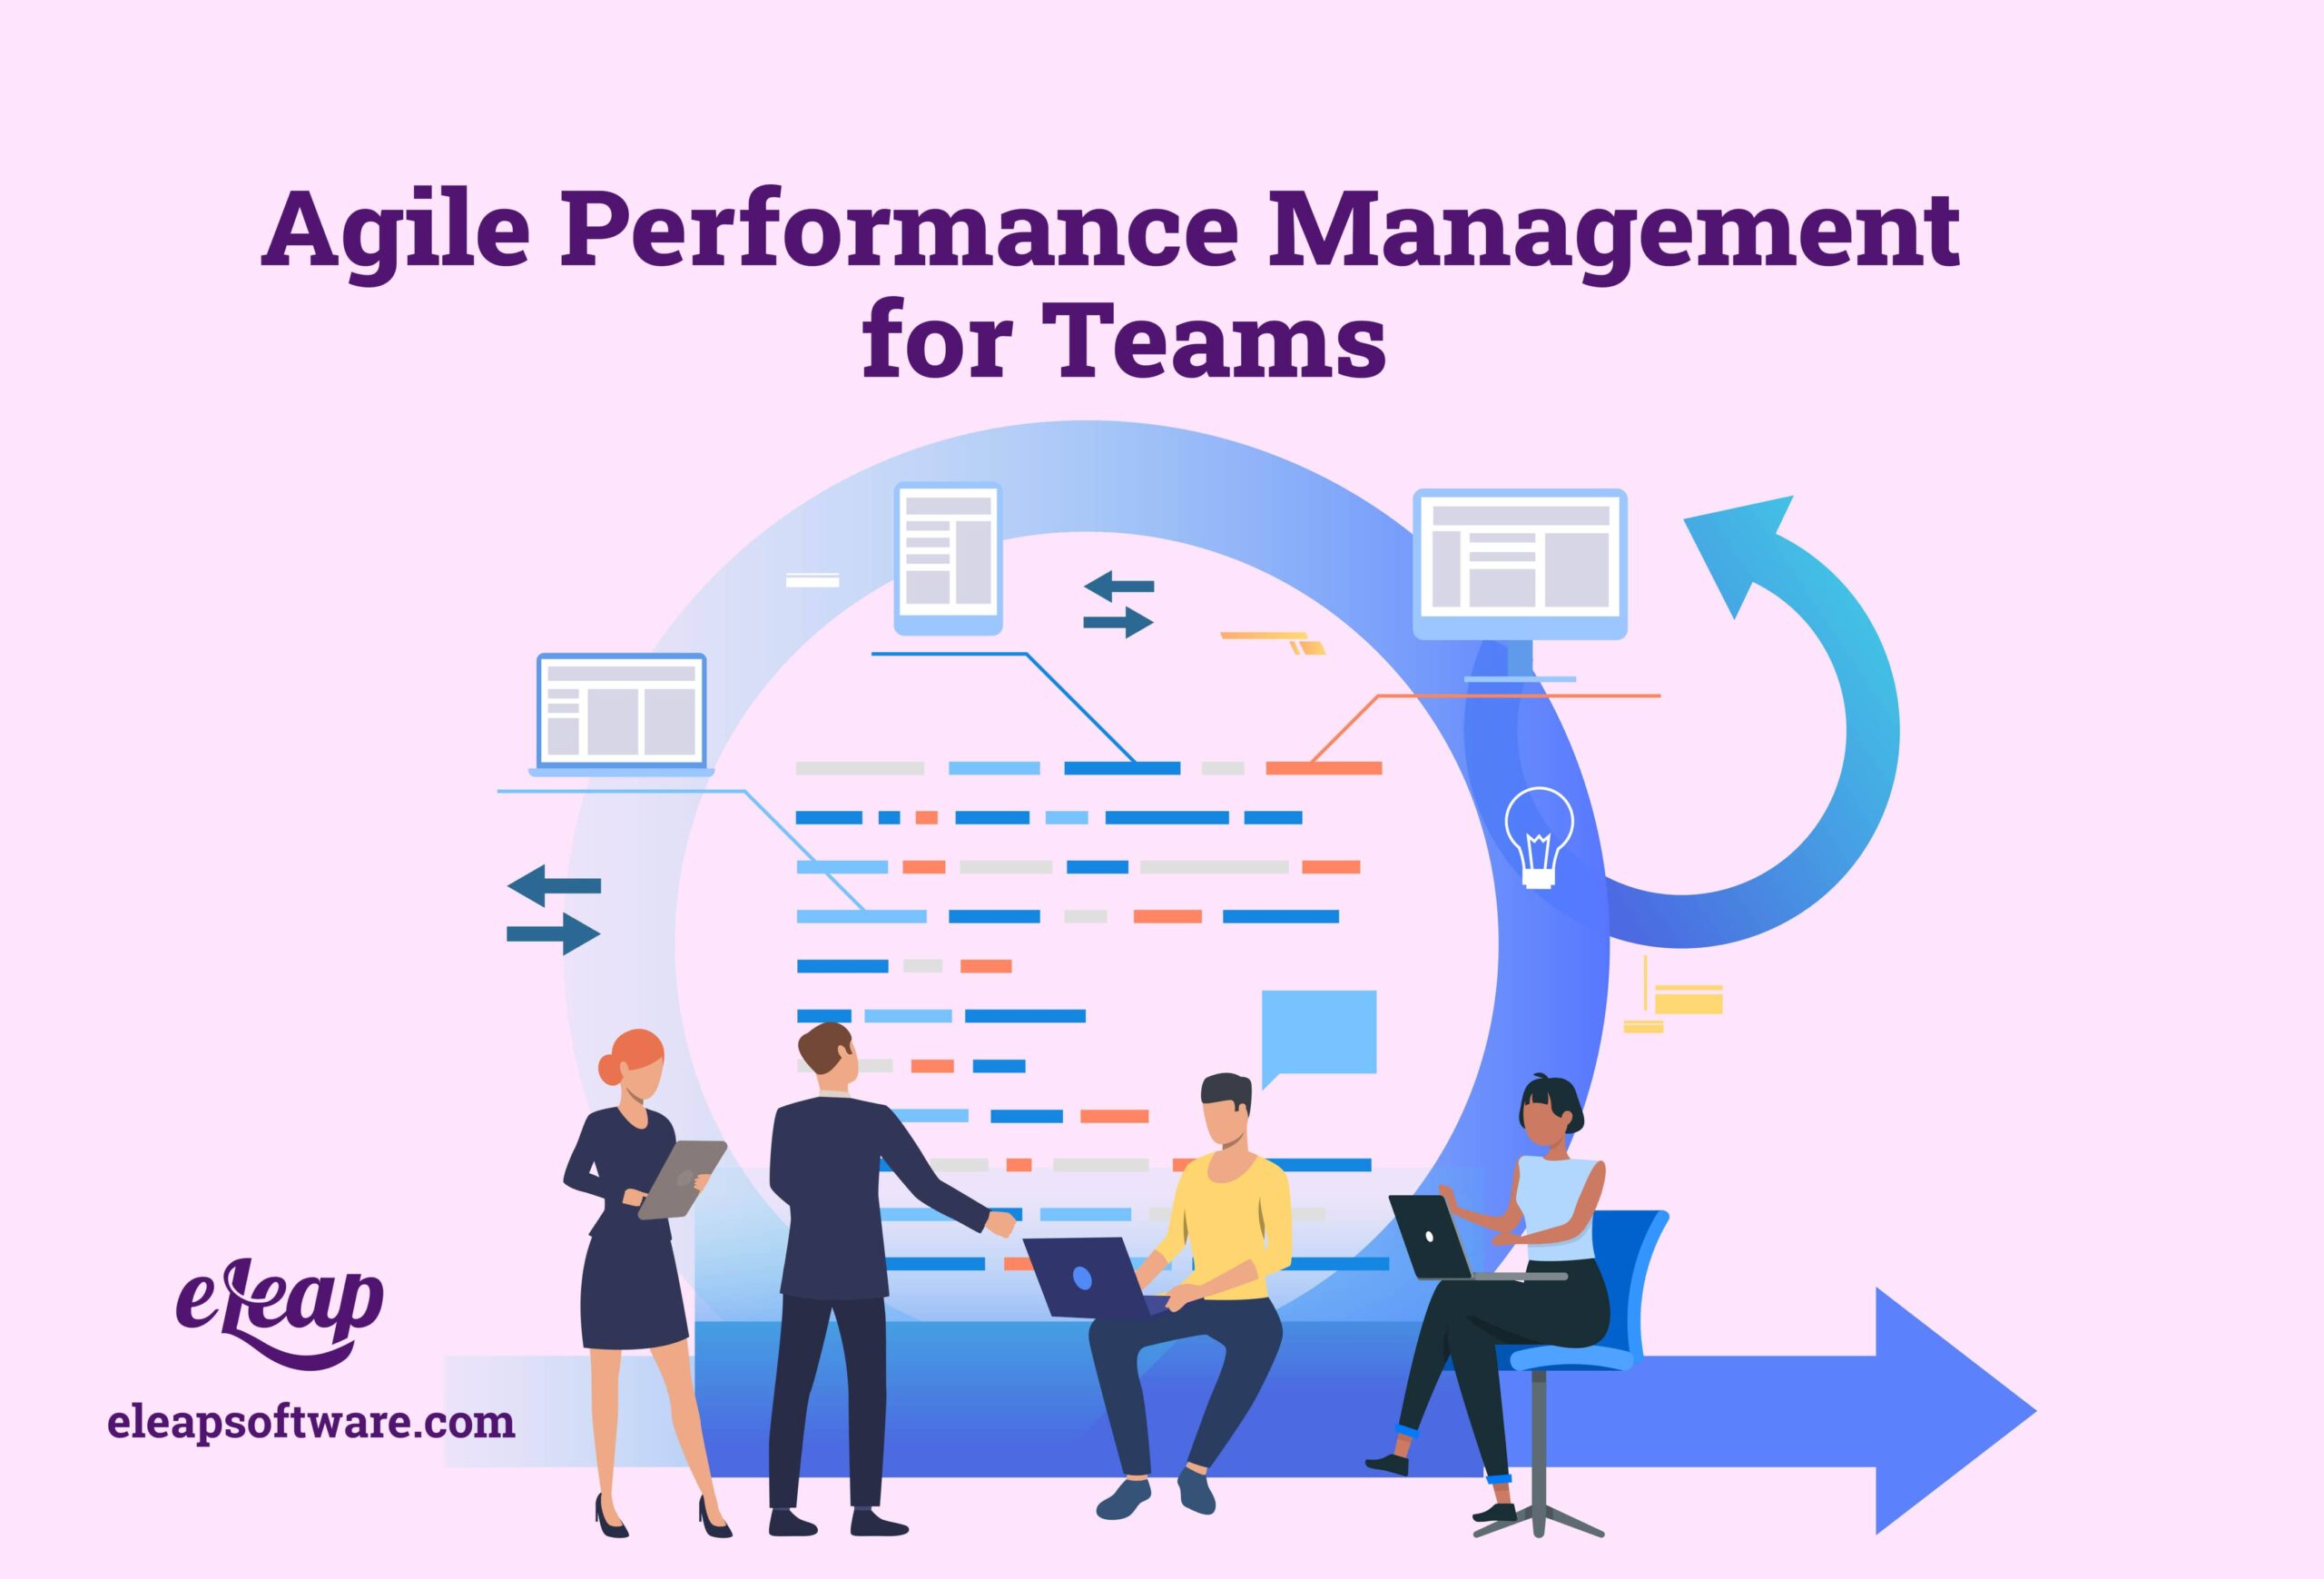 An Agile Approach for Managing Teams